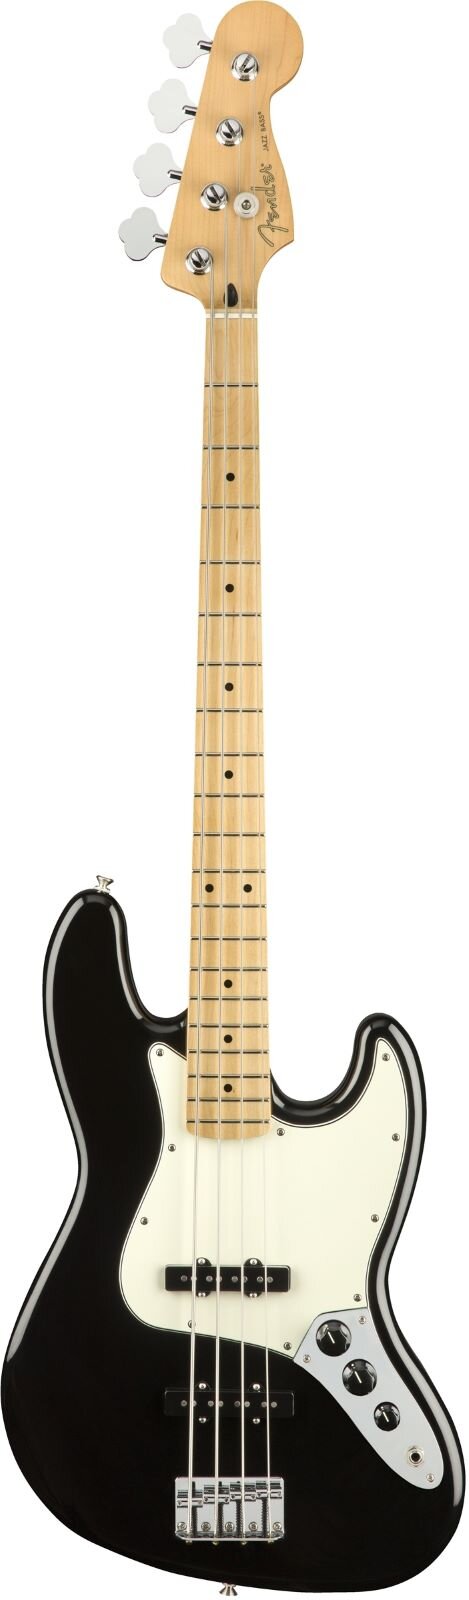 Fender Player Jazz Bass Ahorn Griffbrett schwarz : photo 1